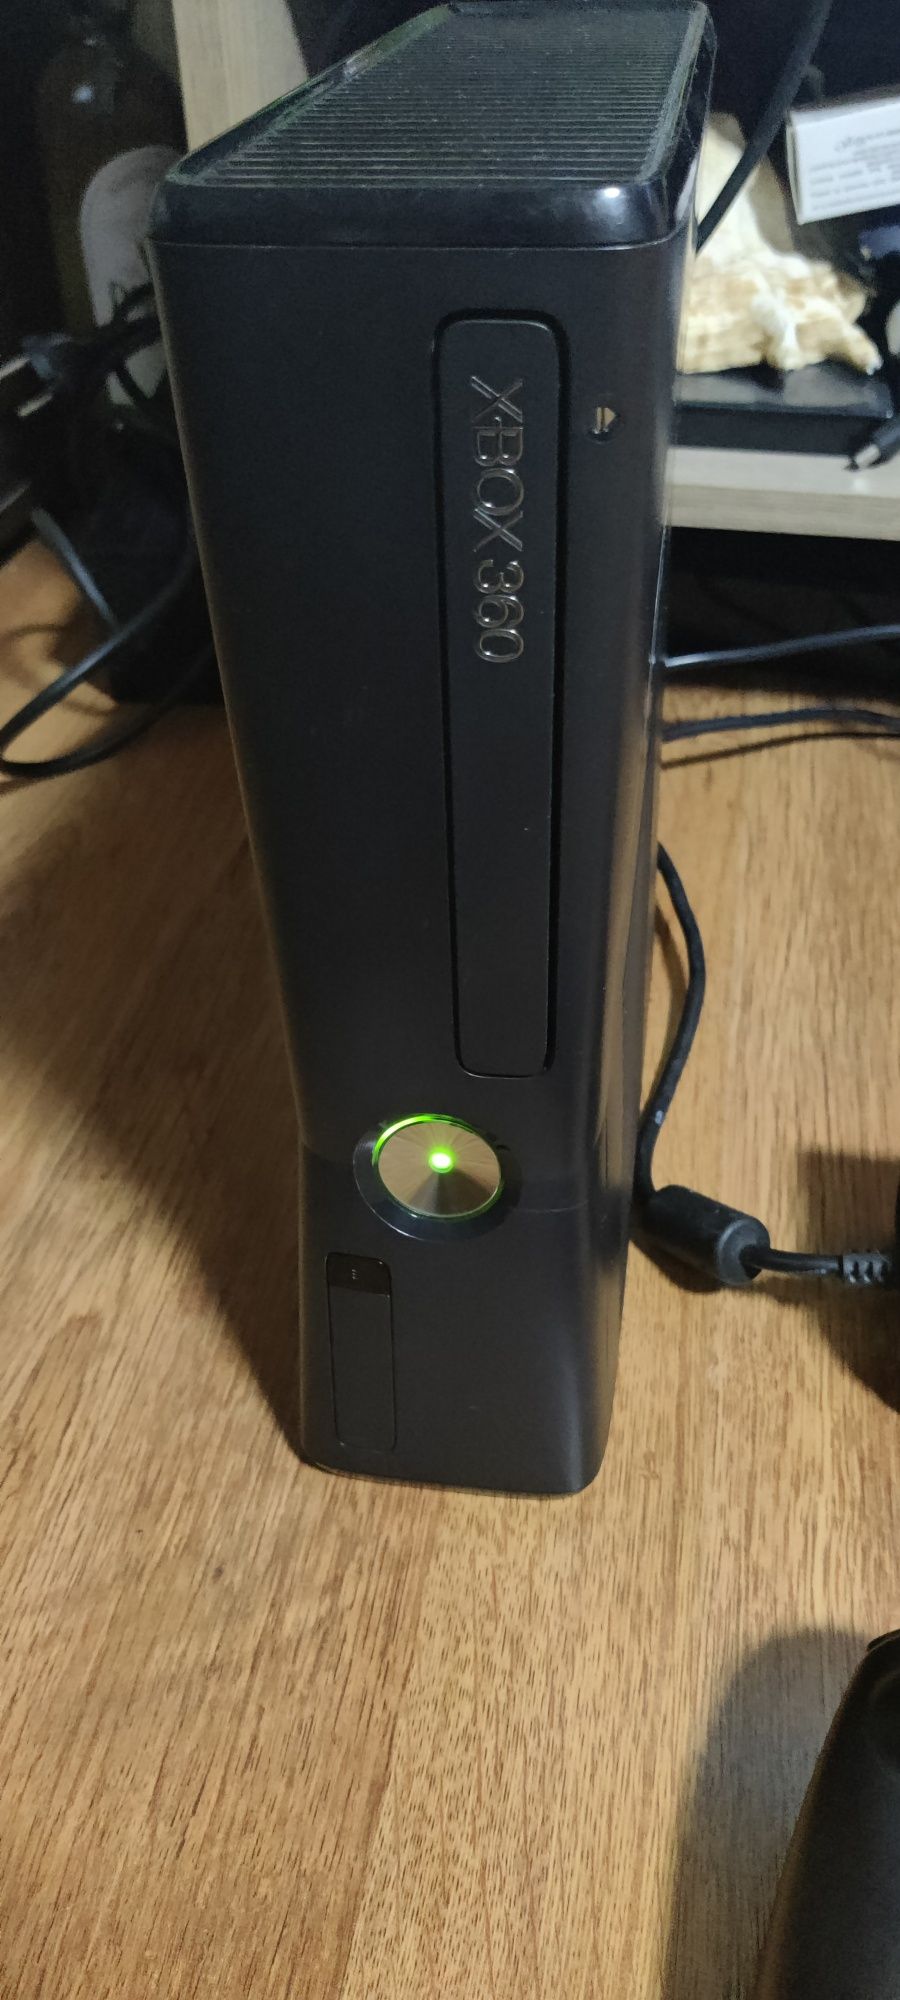 Xbox 360 slim modat